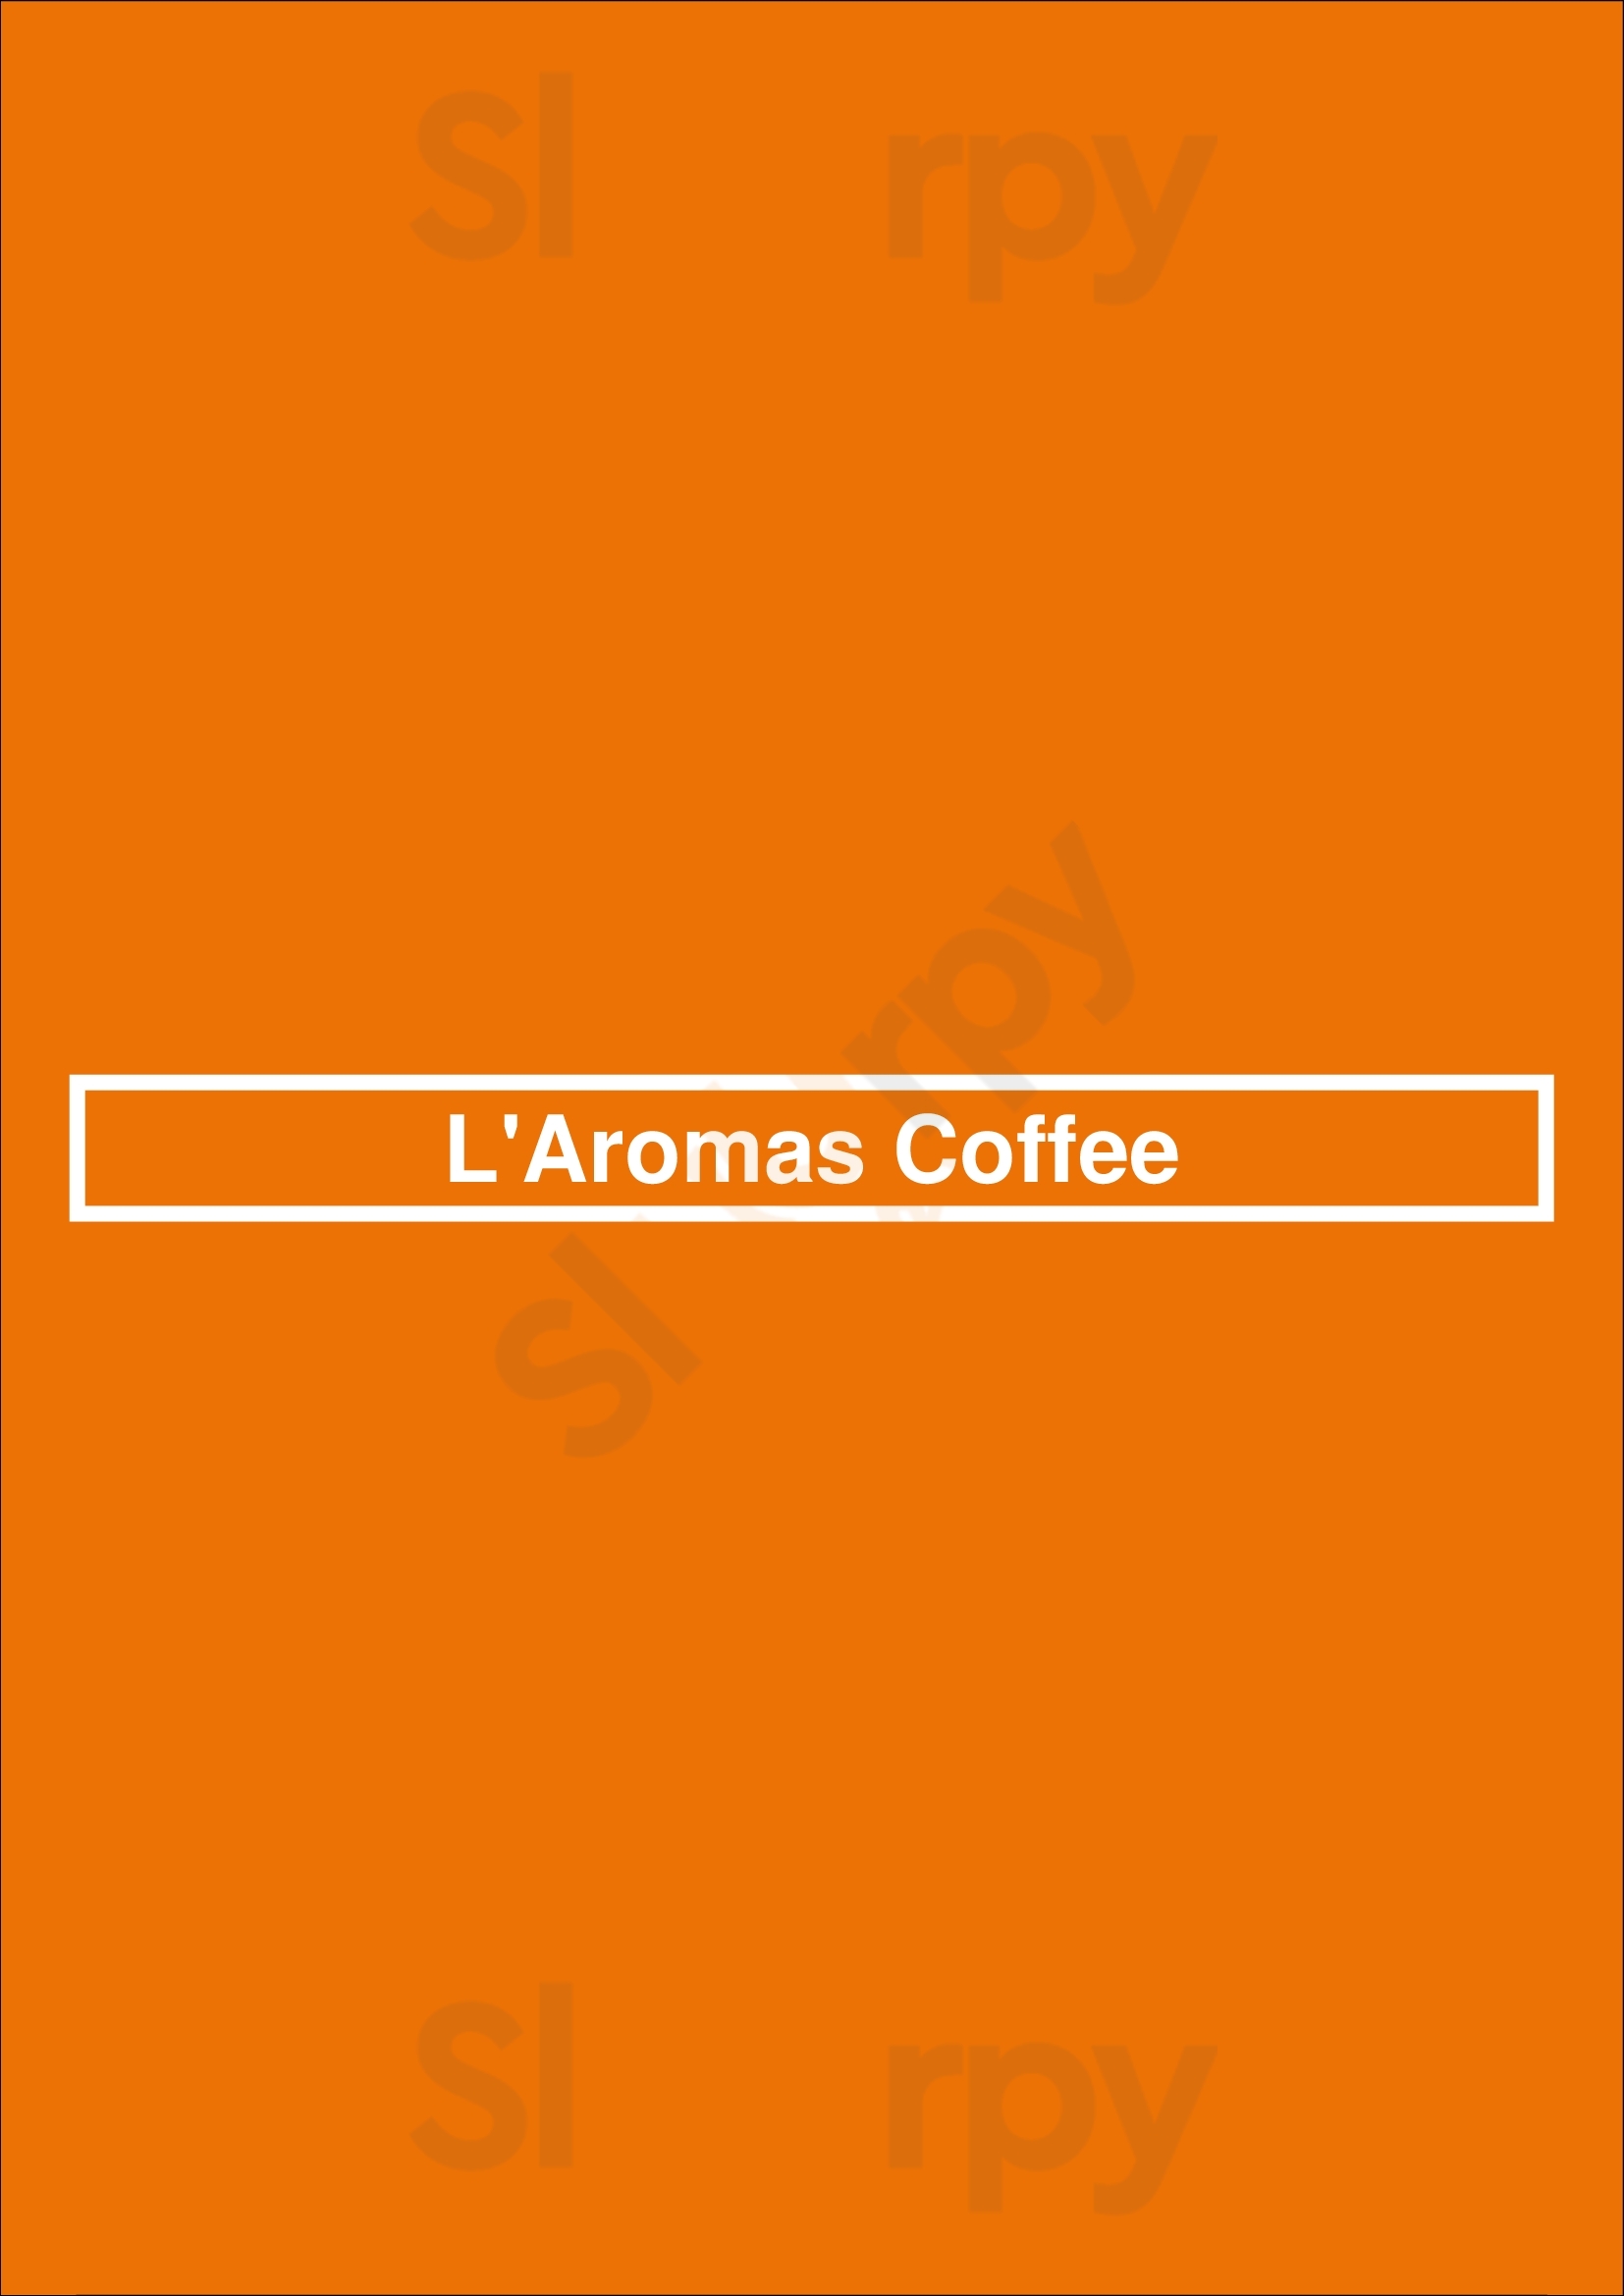 L'aromas Coffee Surrey Menu - 1